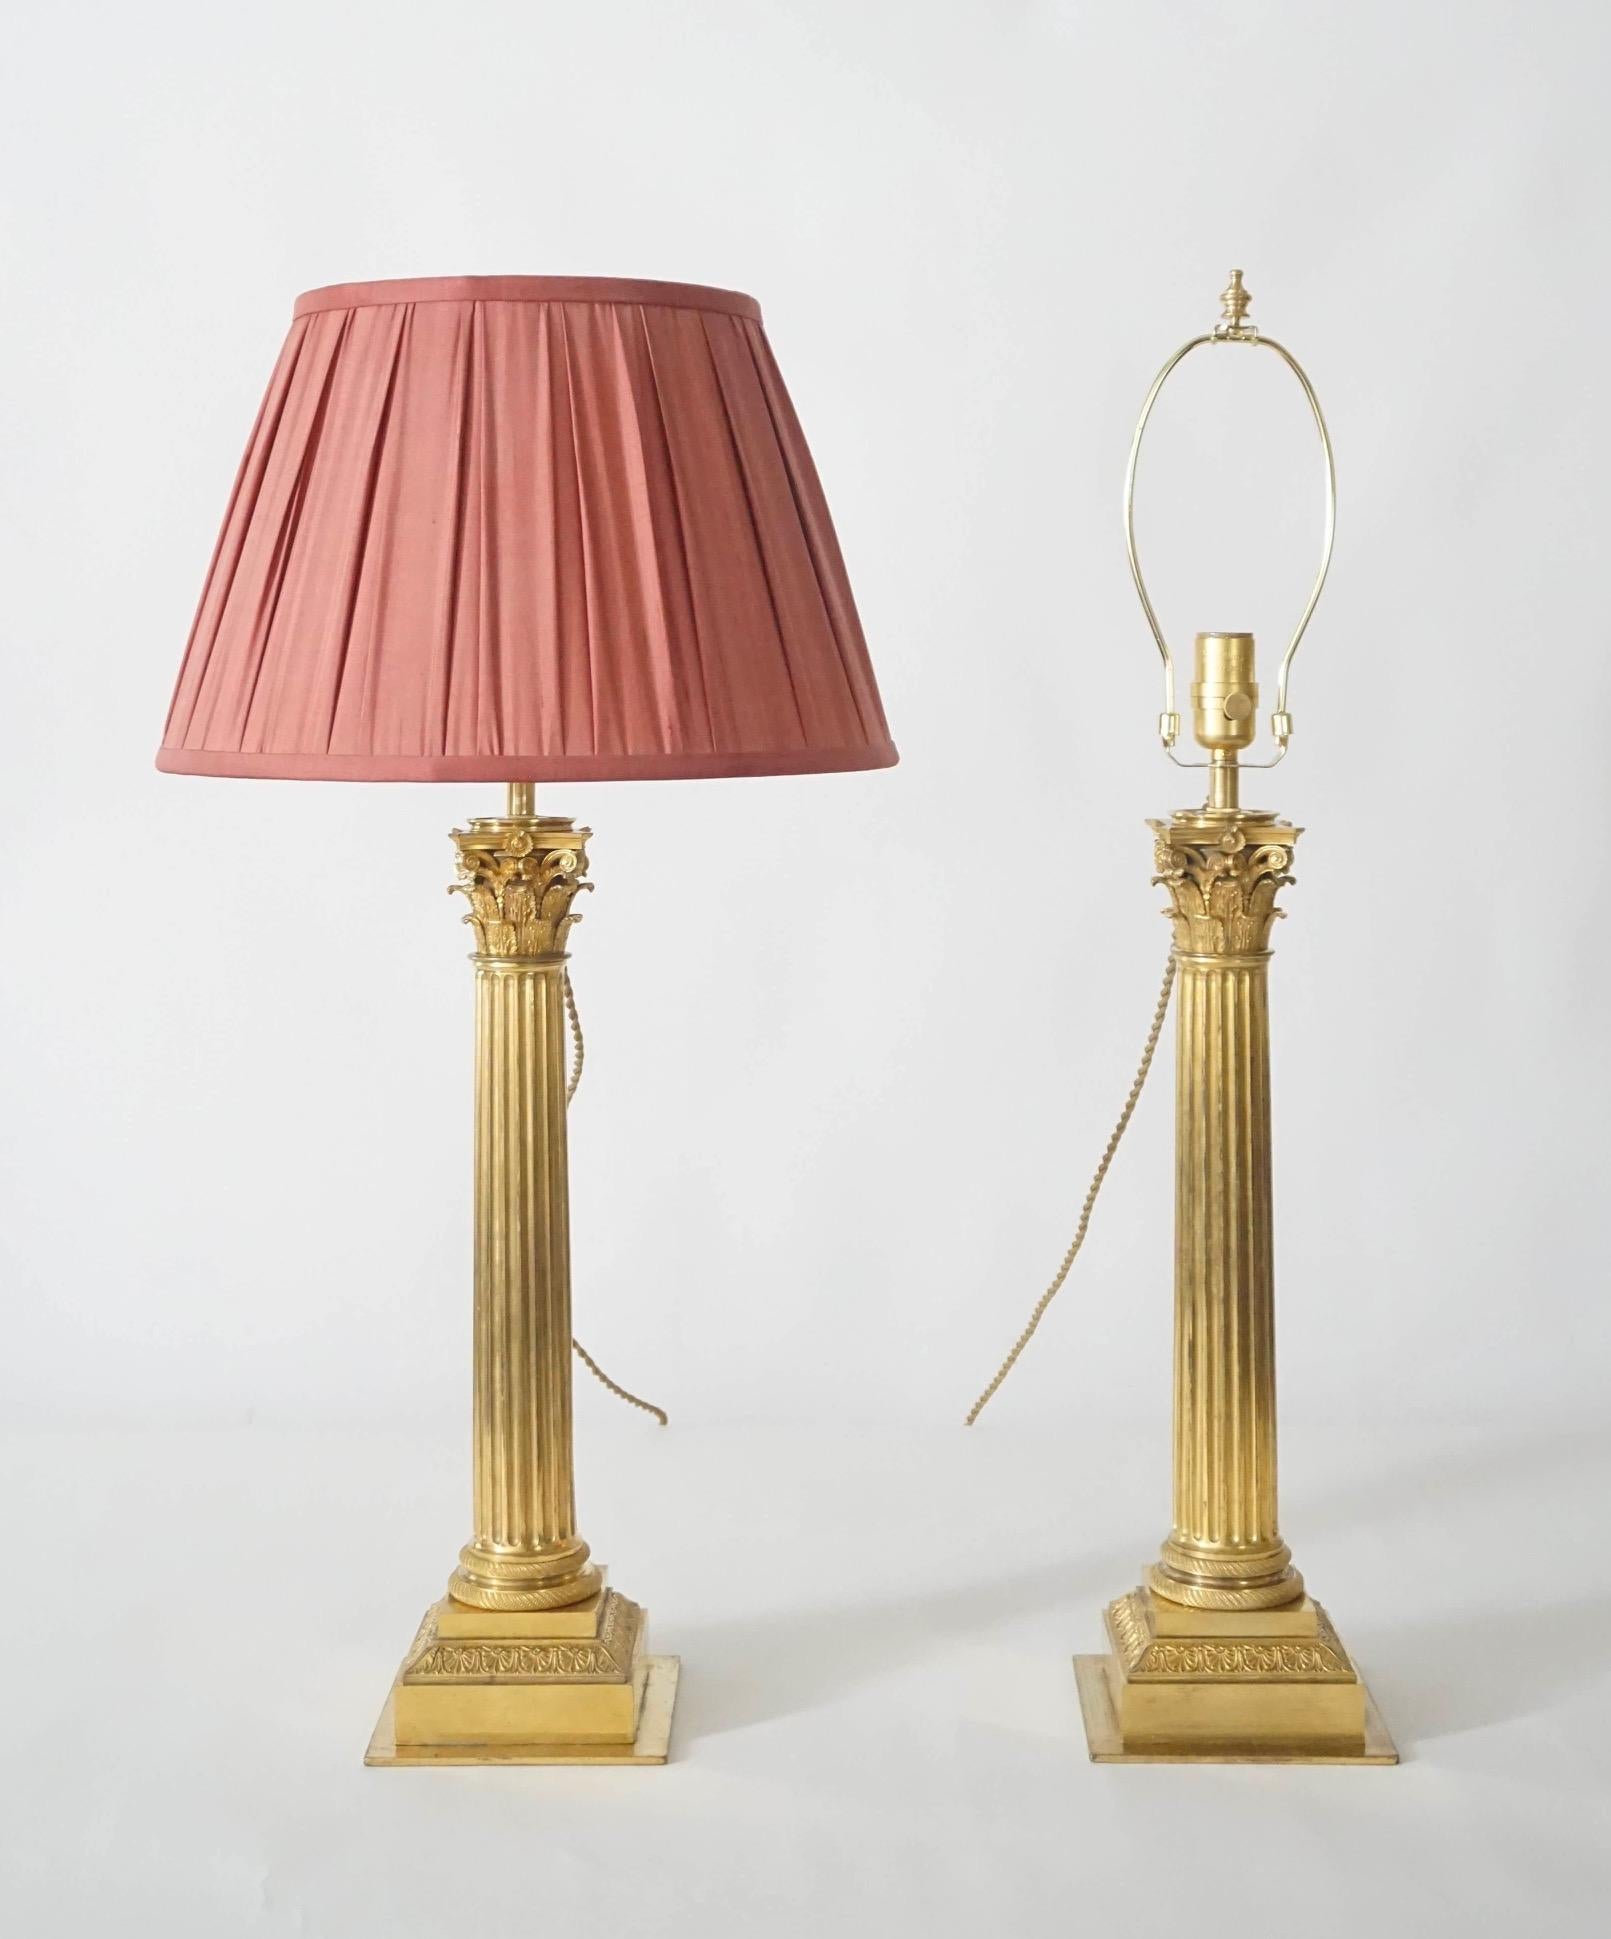 Ormolu Corinthian Column Sinumbra Base Table Lamps, France, circa 1825 For Sale 4